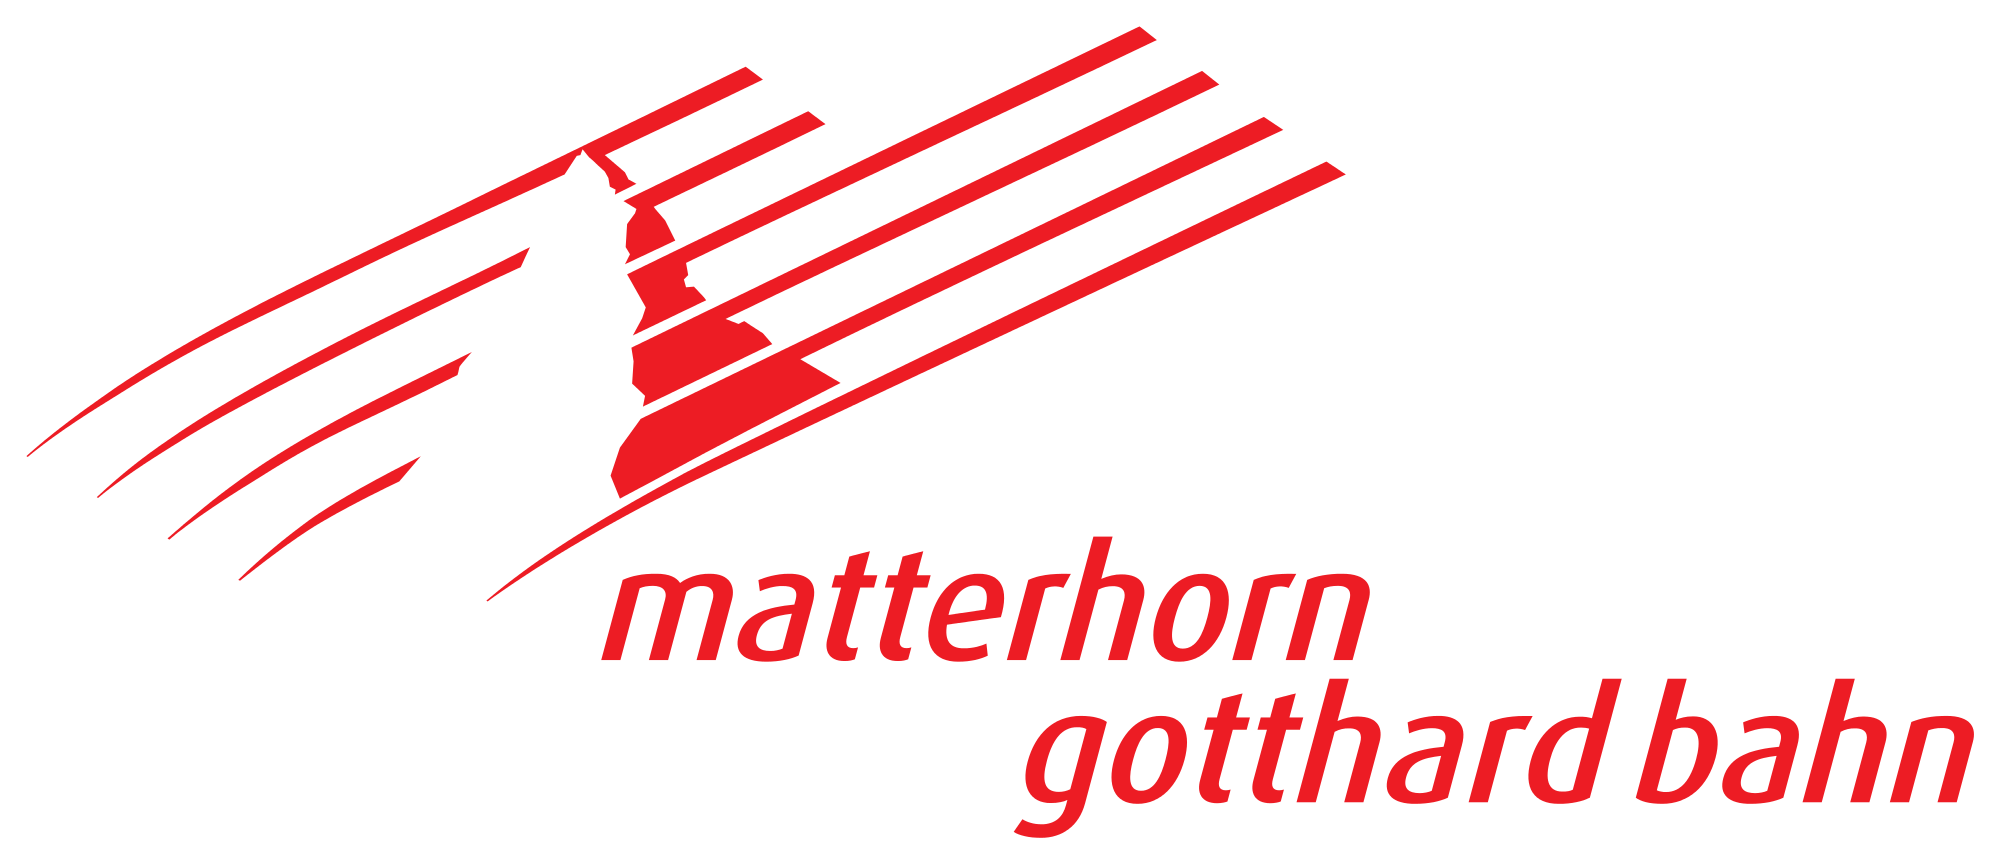 Matterhorn svg #7, Download drawings